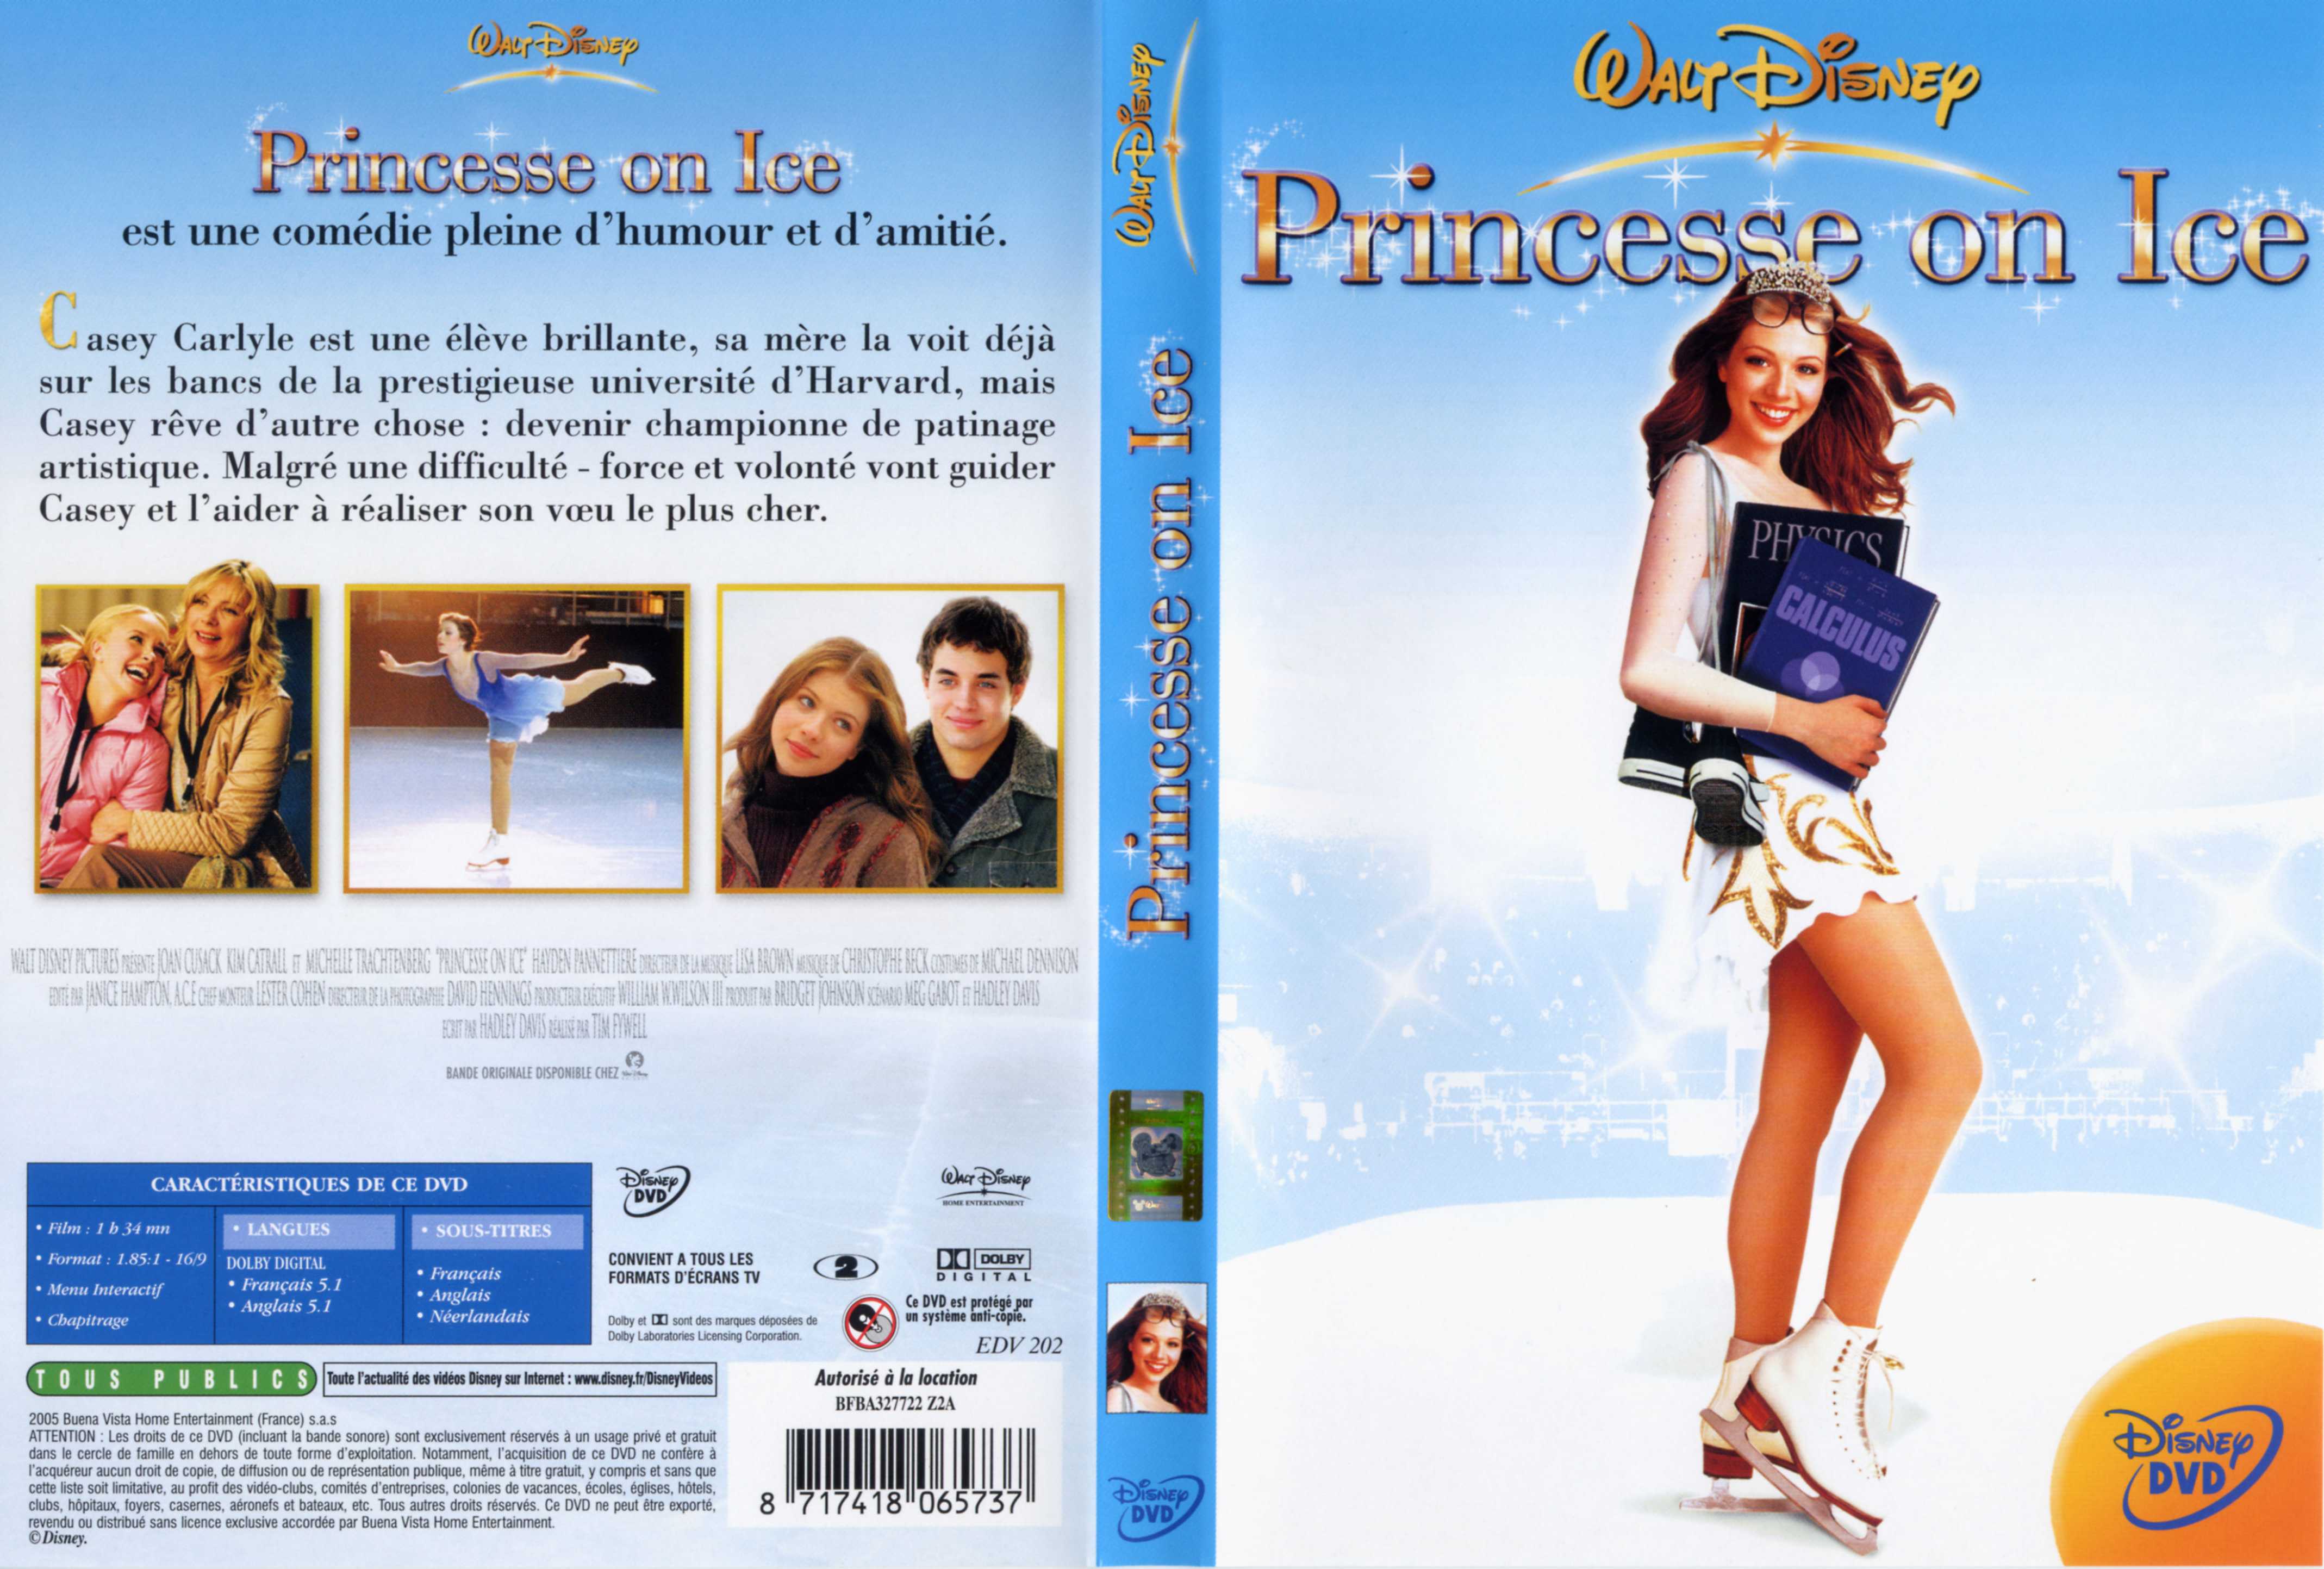 Jaquette DVD Princesse on ice